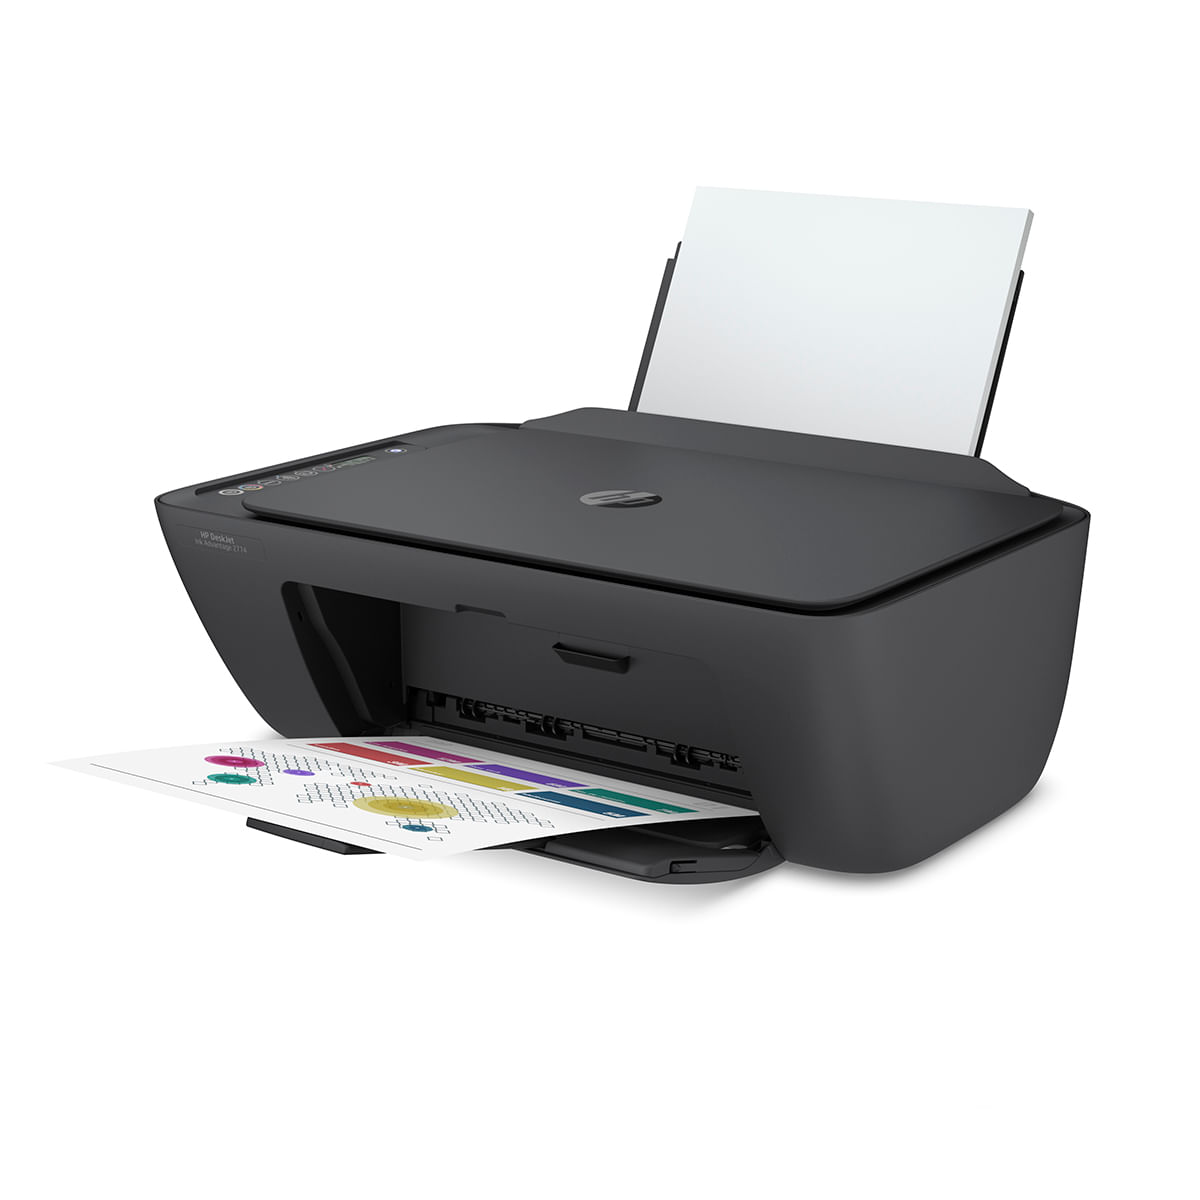 1. Impressora Multifuncional DeskJet - HP